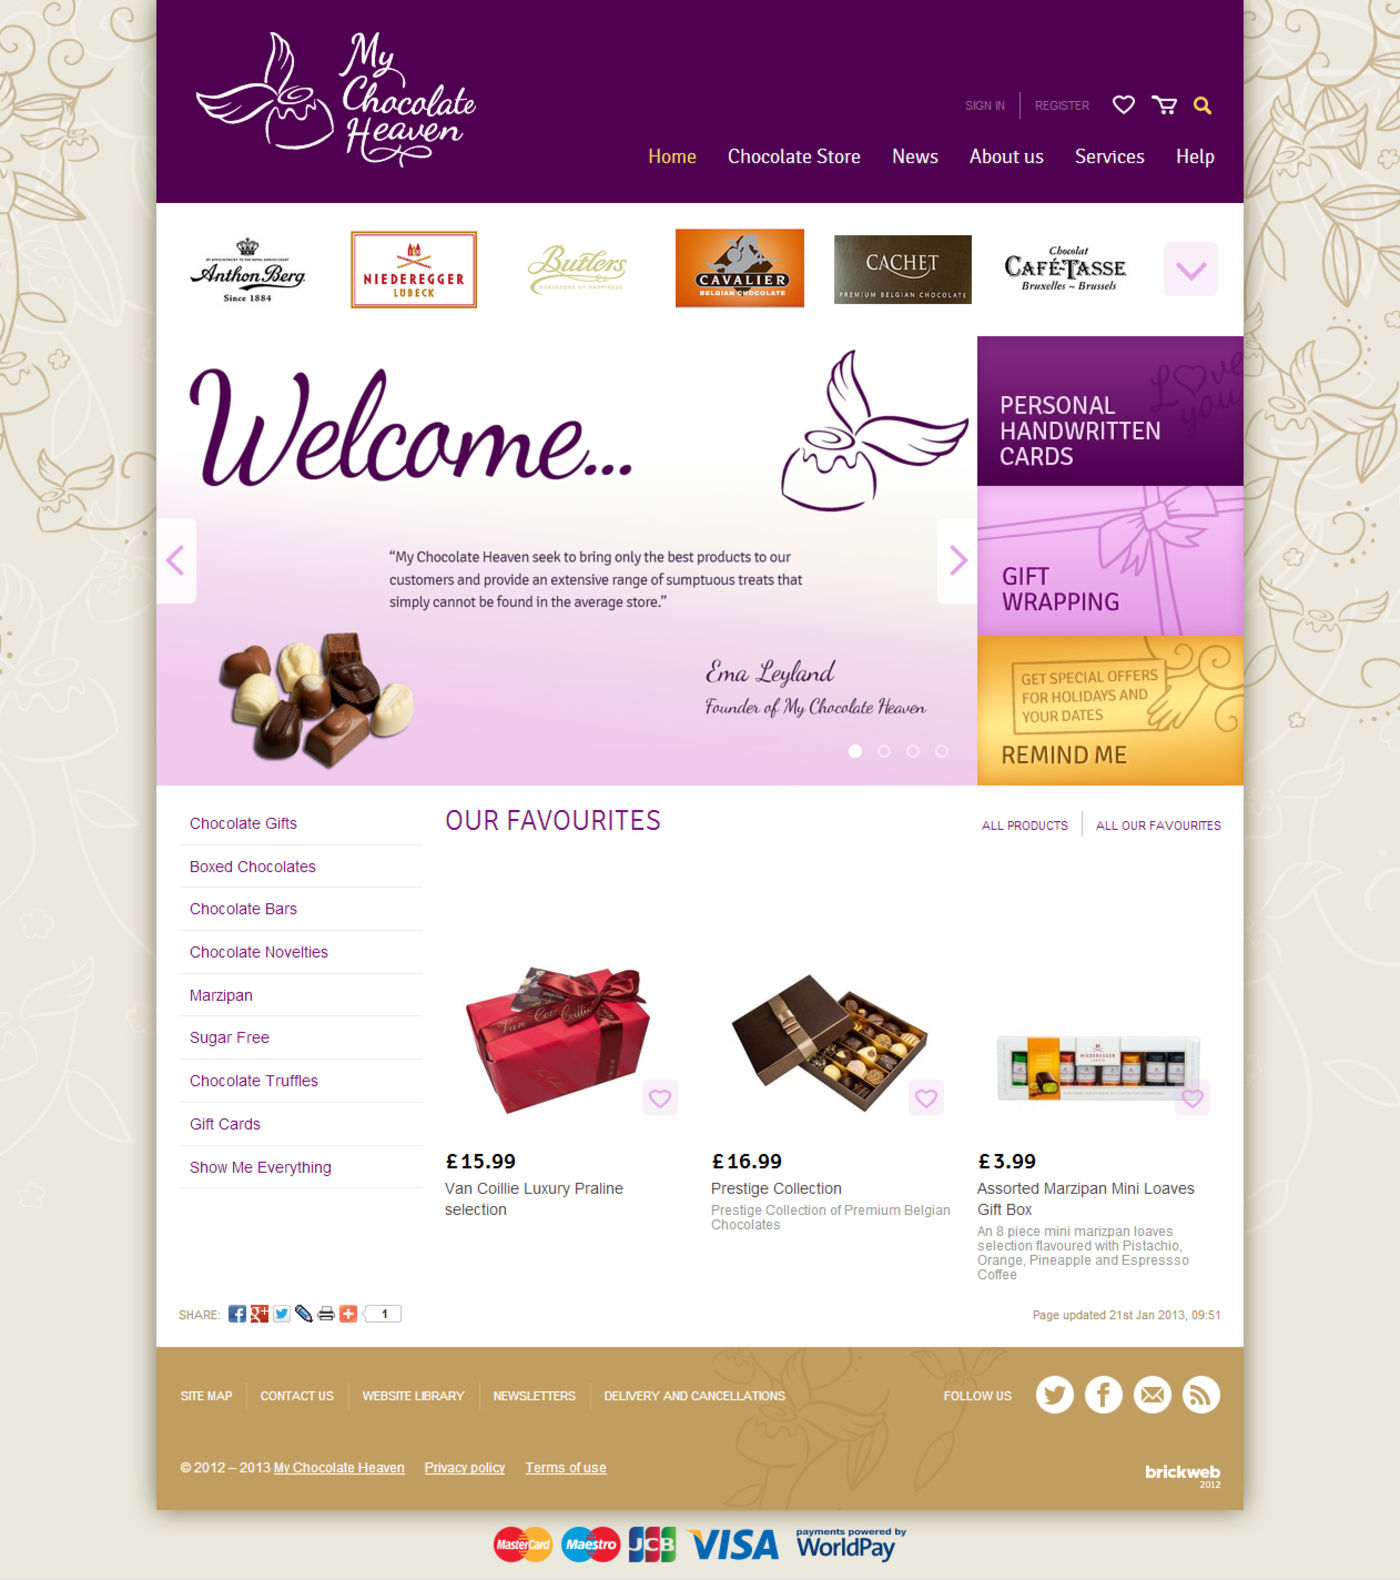 My Chocolate Heaven Homepage